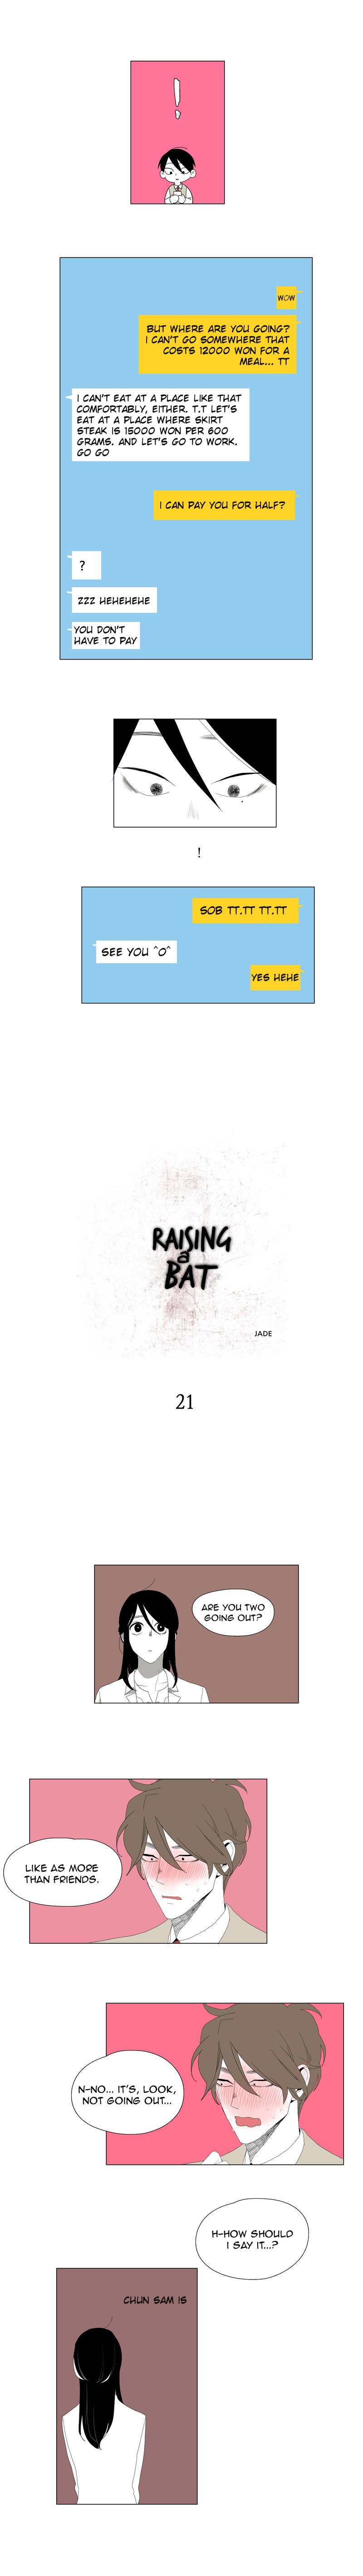 Raising a Bat 21